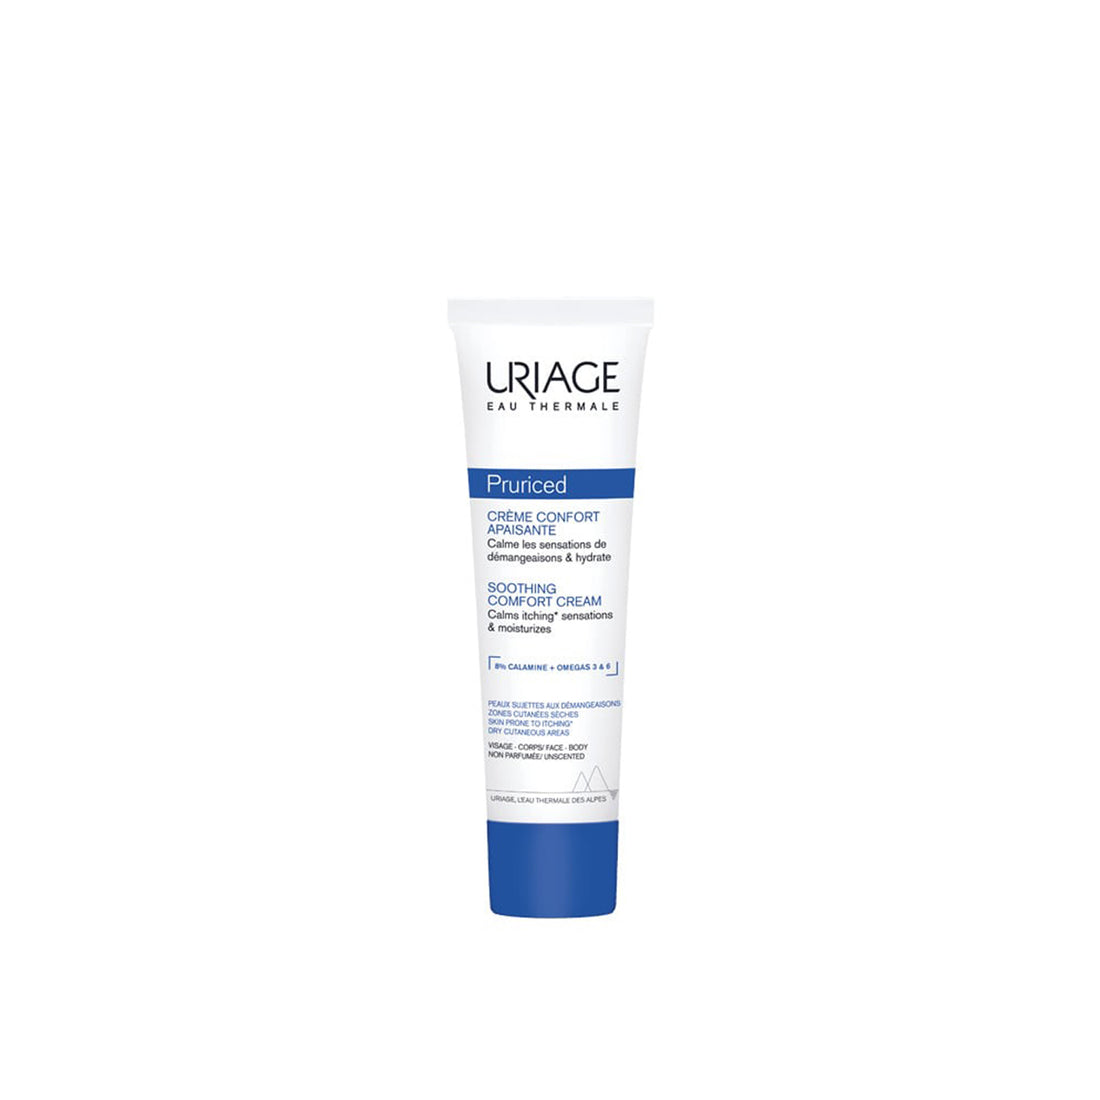 Uriage Pruriced Soothing Comfort Cream 100ml (3.4 fl oz)